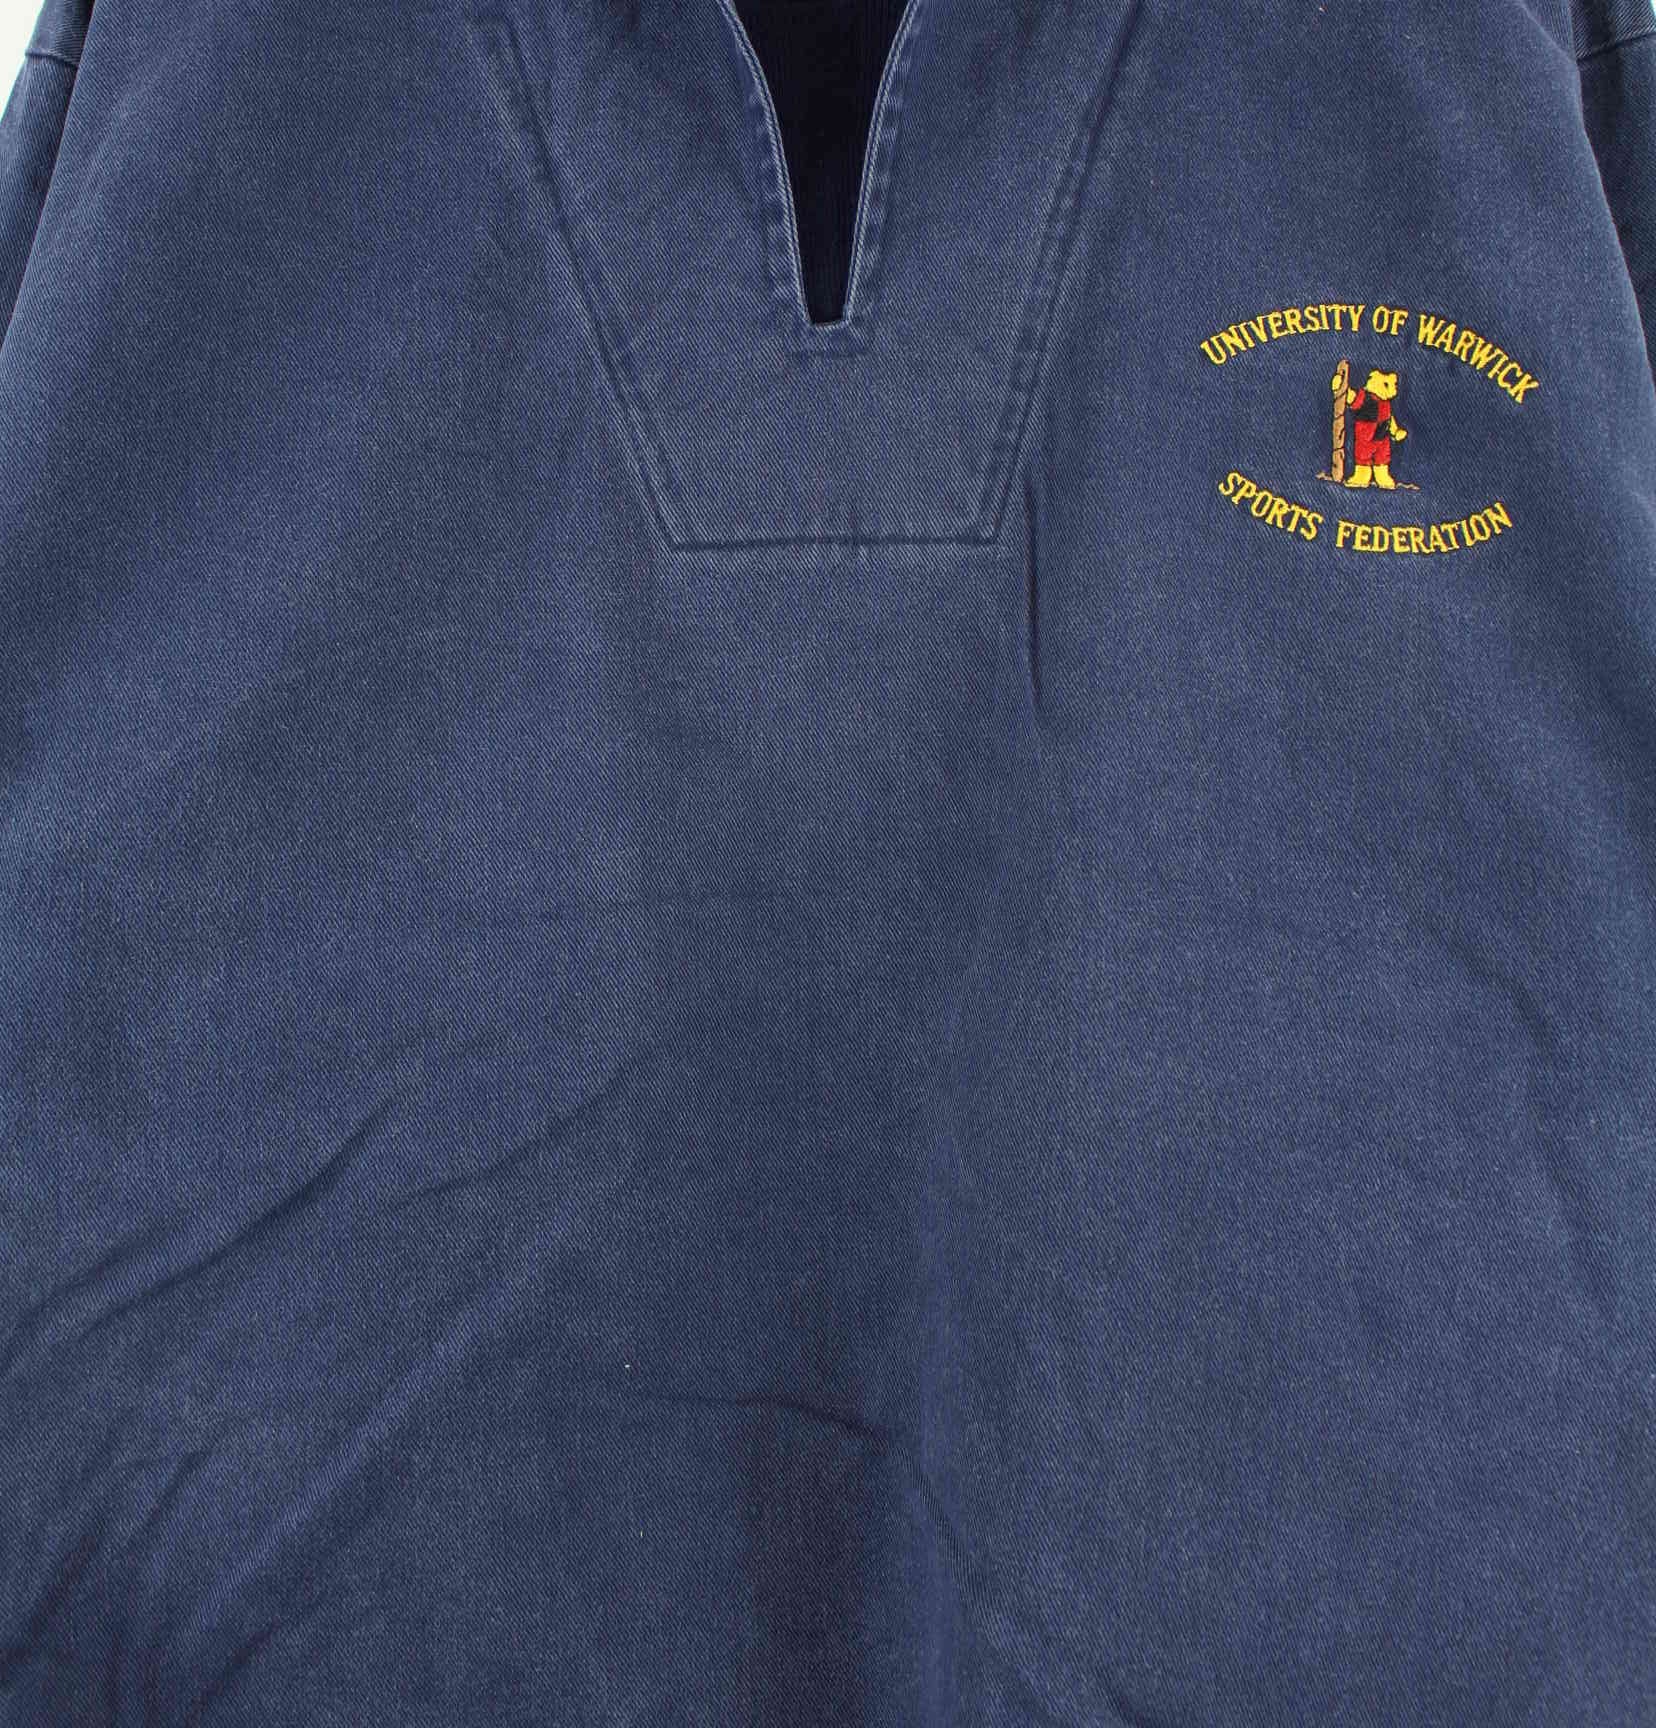 Vintage 90s University Warwick Embroidered Jacke Blau L (detail image 1)